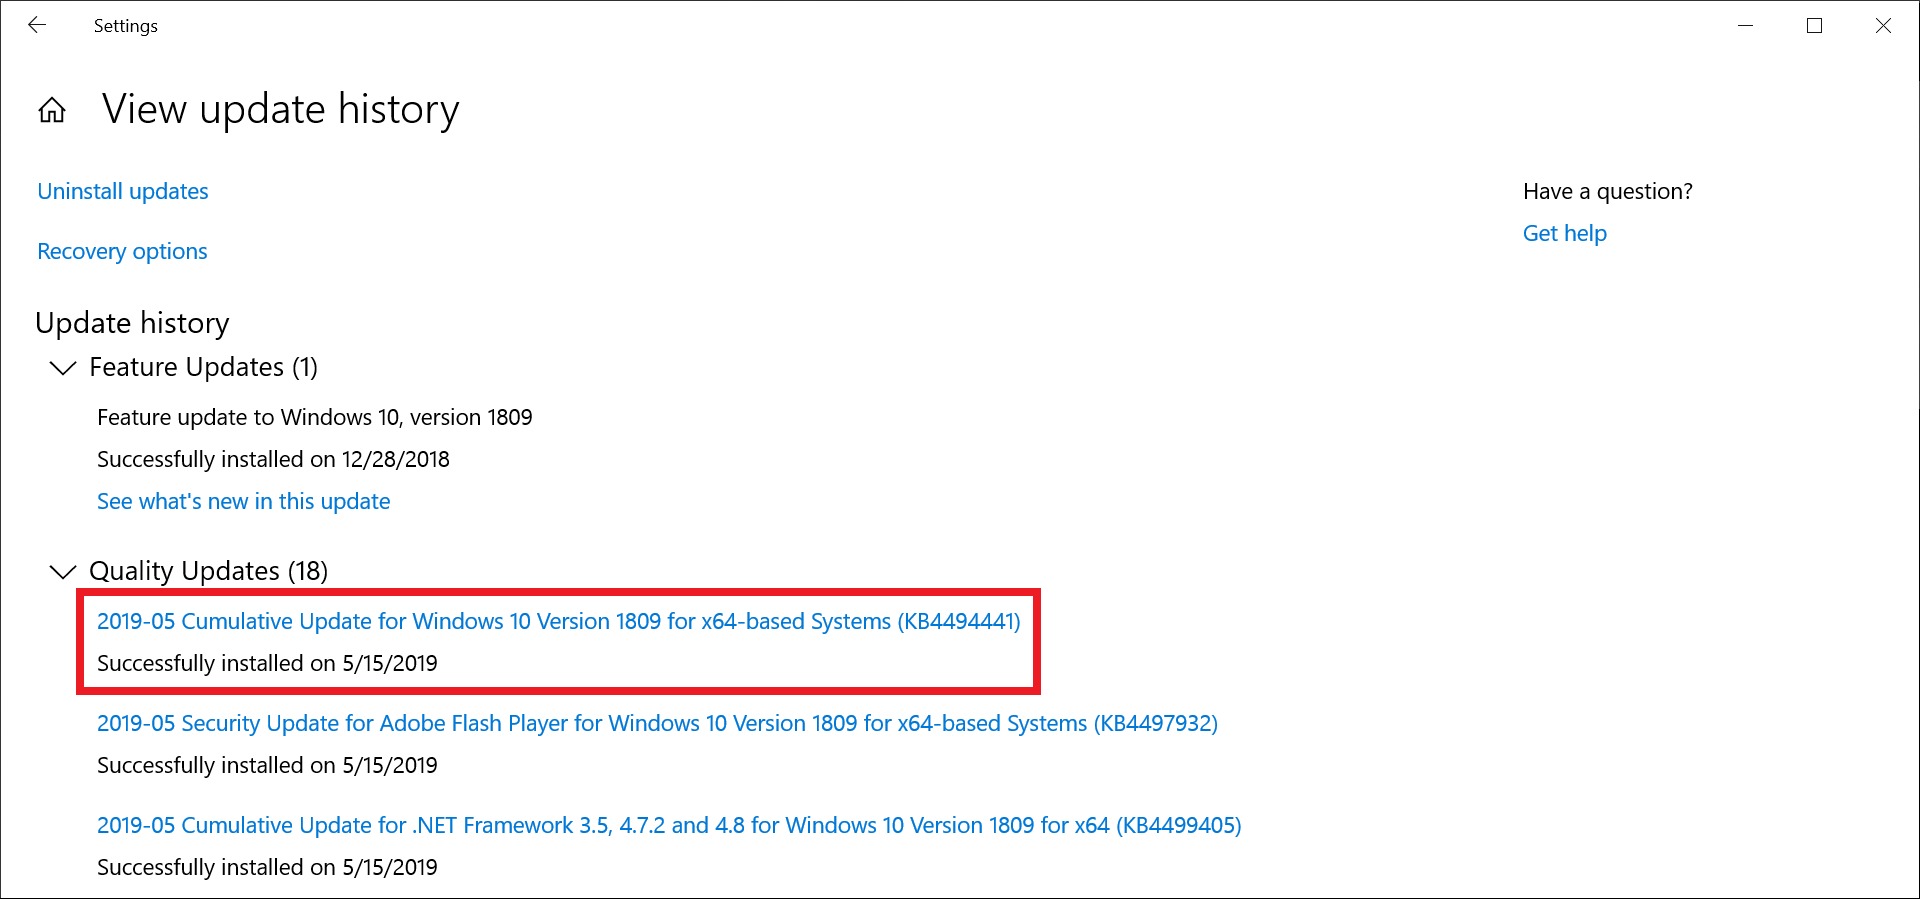 Windows Update History Showing Cumulative Update for Windows 10 KB4494441